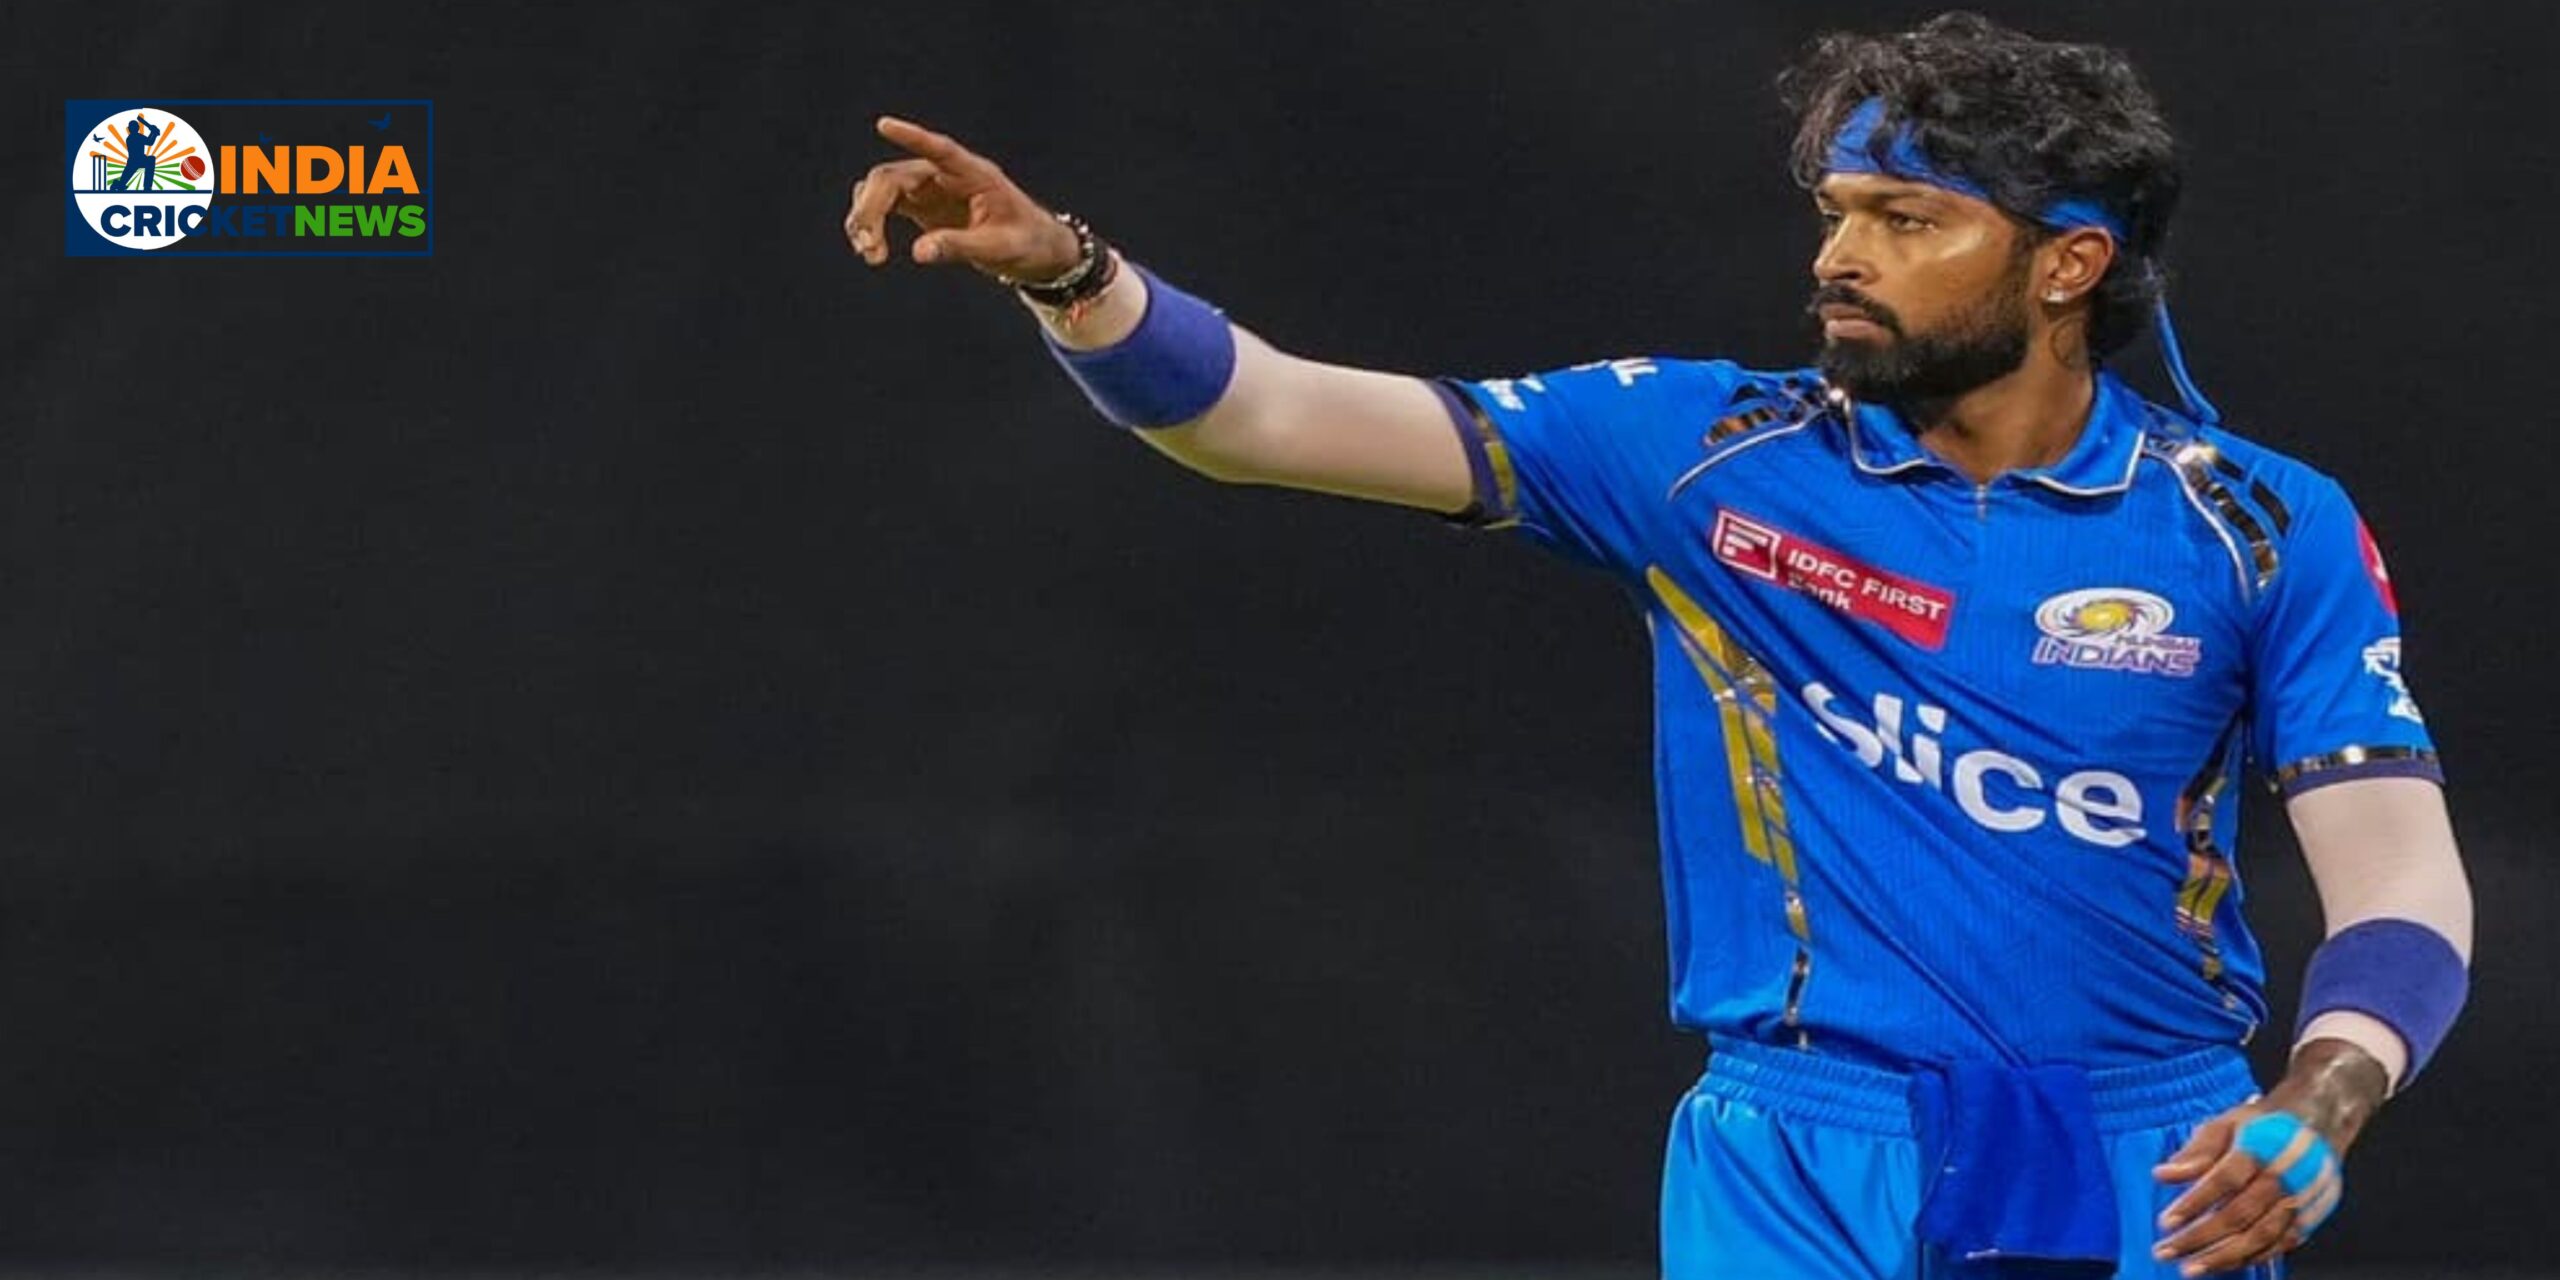 Sunil Gavaskar calls Hardik Pandya’s captaincy and bowling ‘absolutely ordinary’